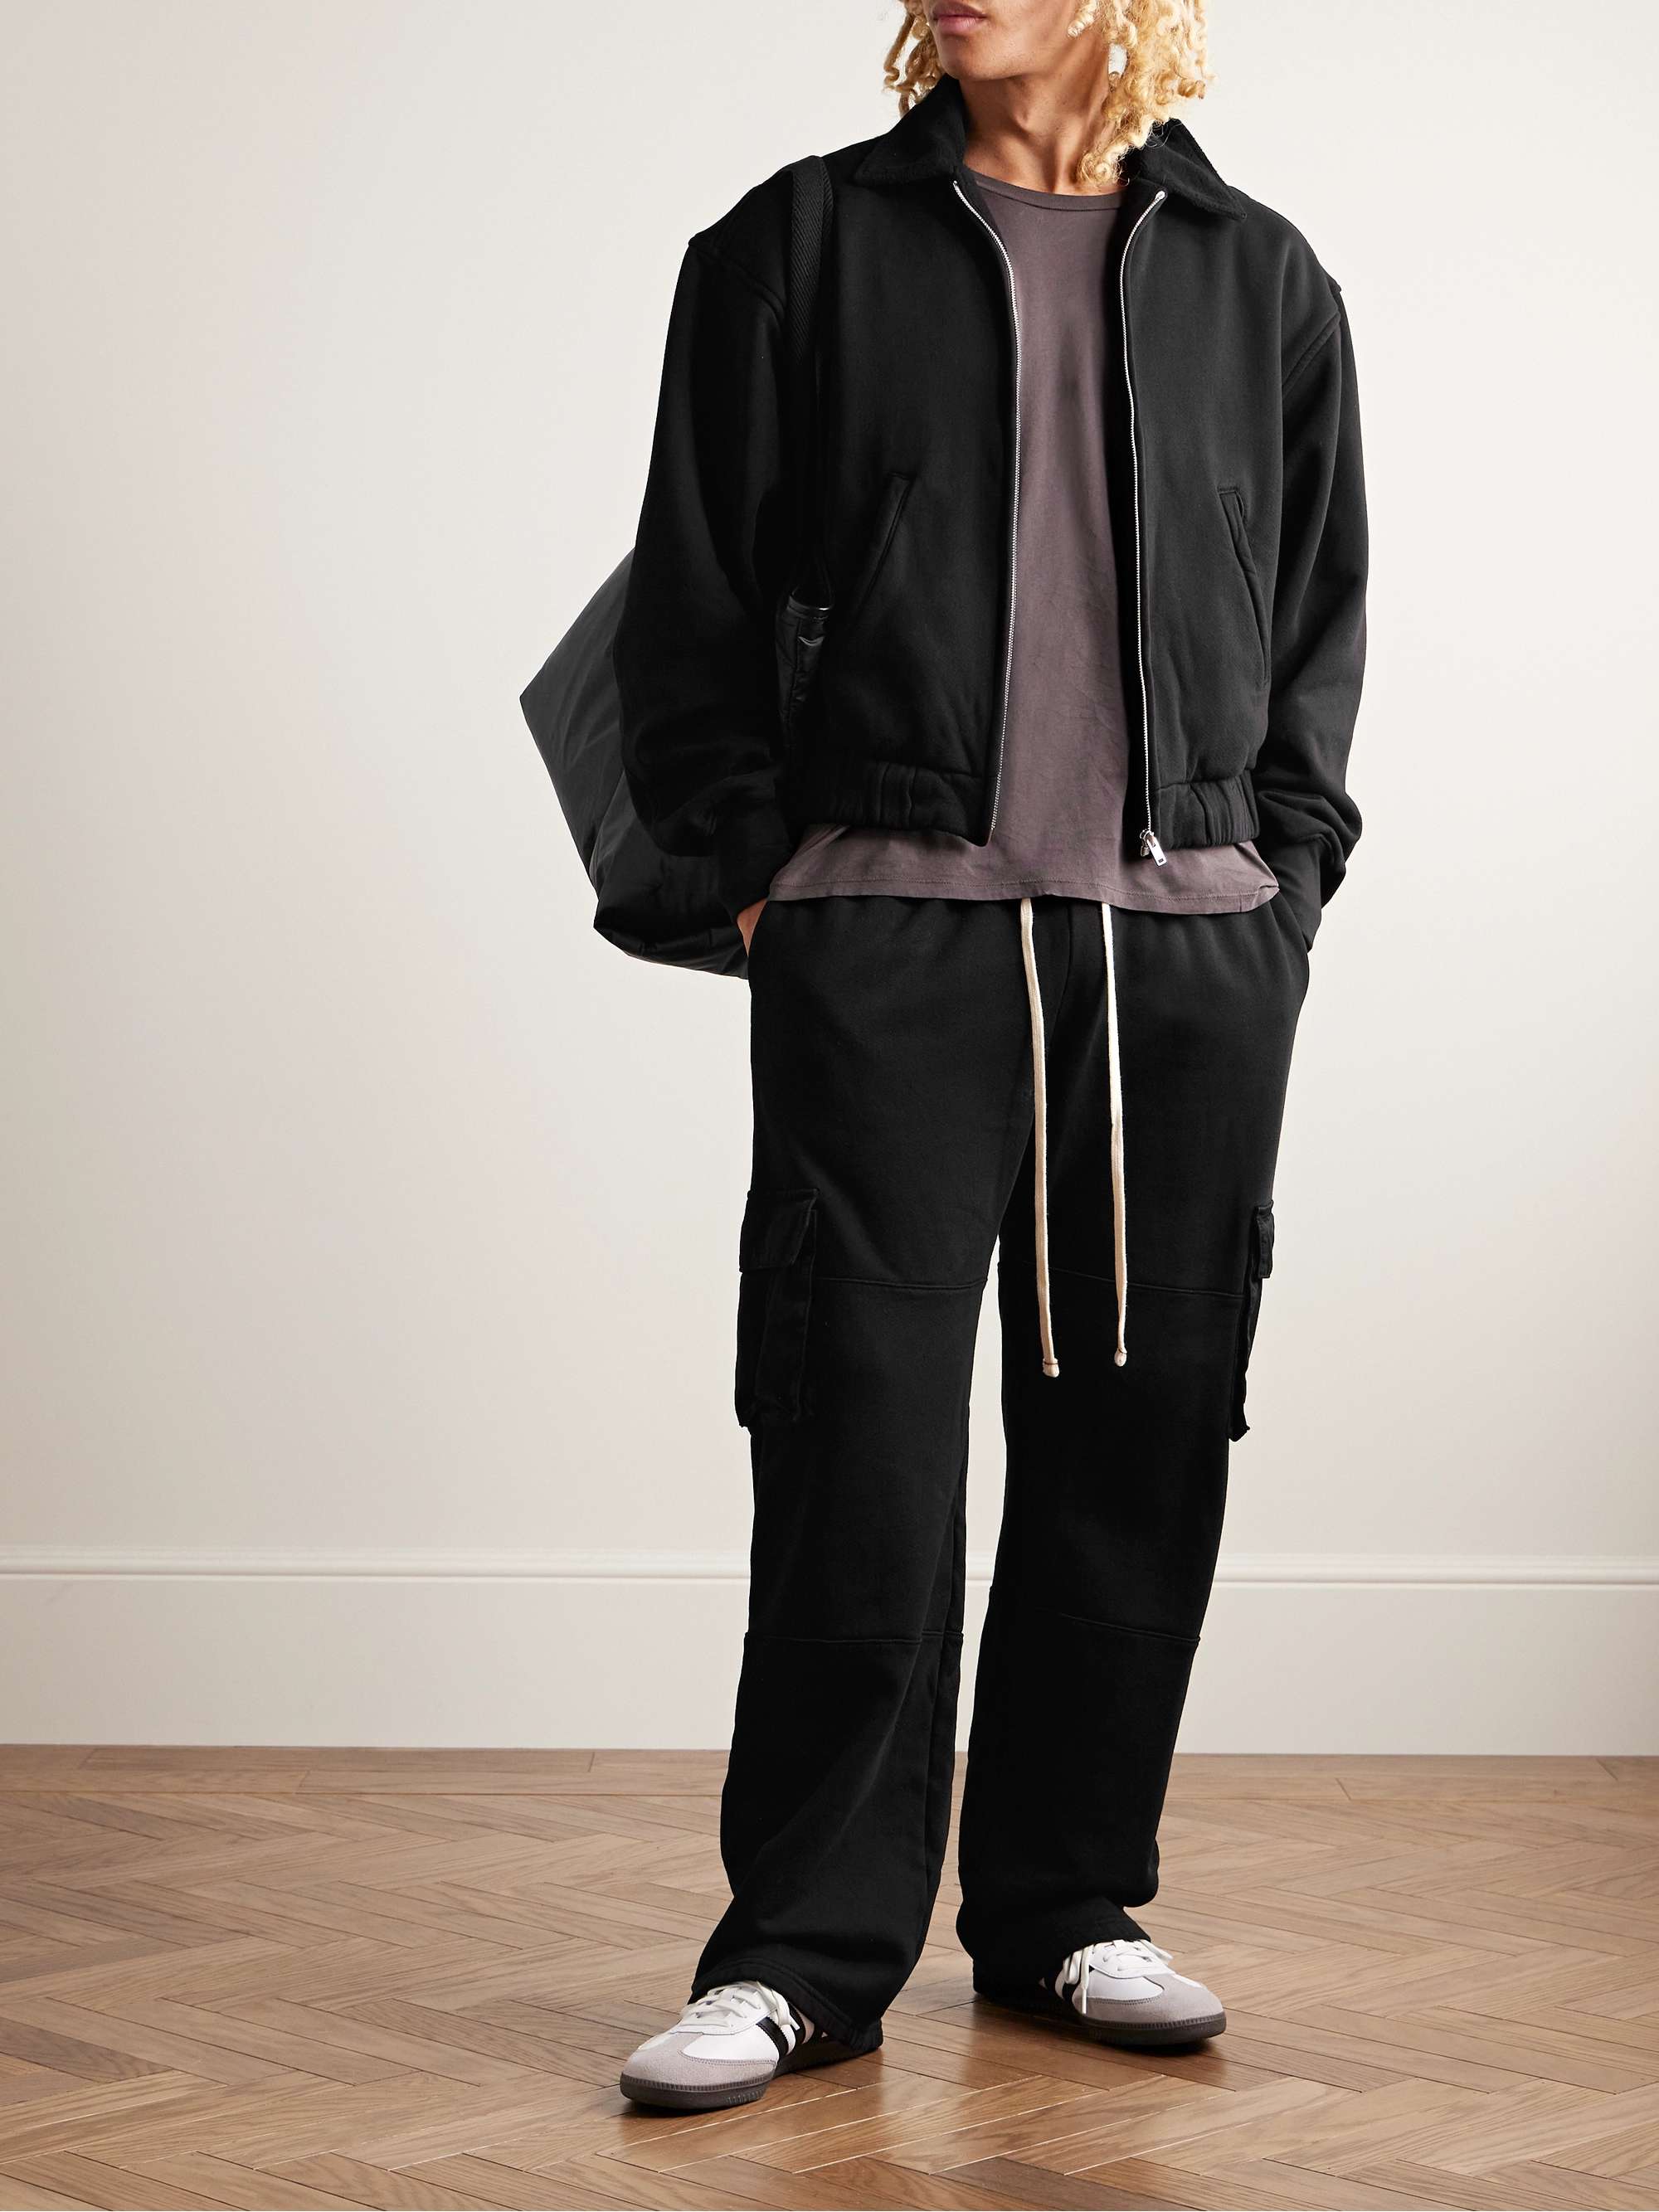 Les Tien Cotton-jersey Bomber Jacket - Men - Black Coats and Jackets - L